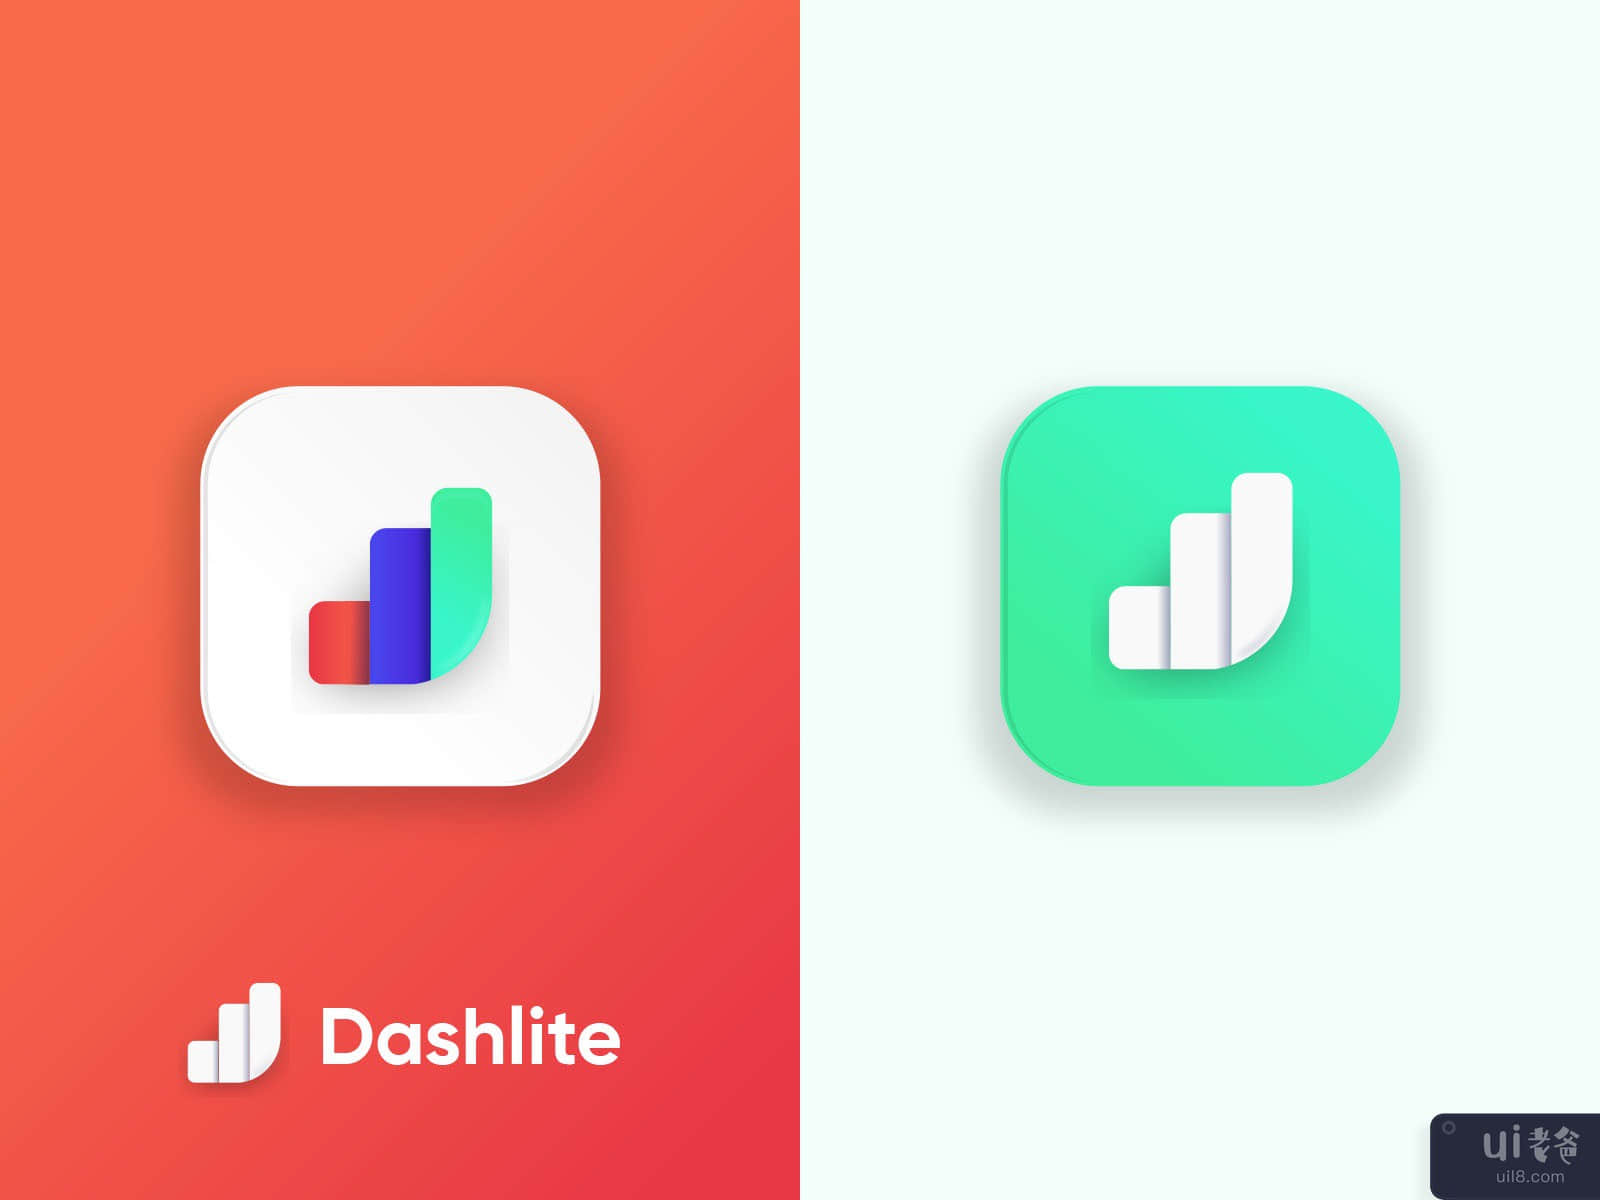 3D Dashboard Icon - Dashlite App Icon Design